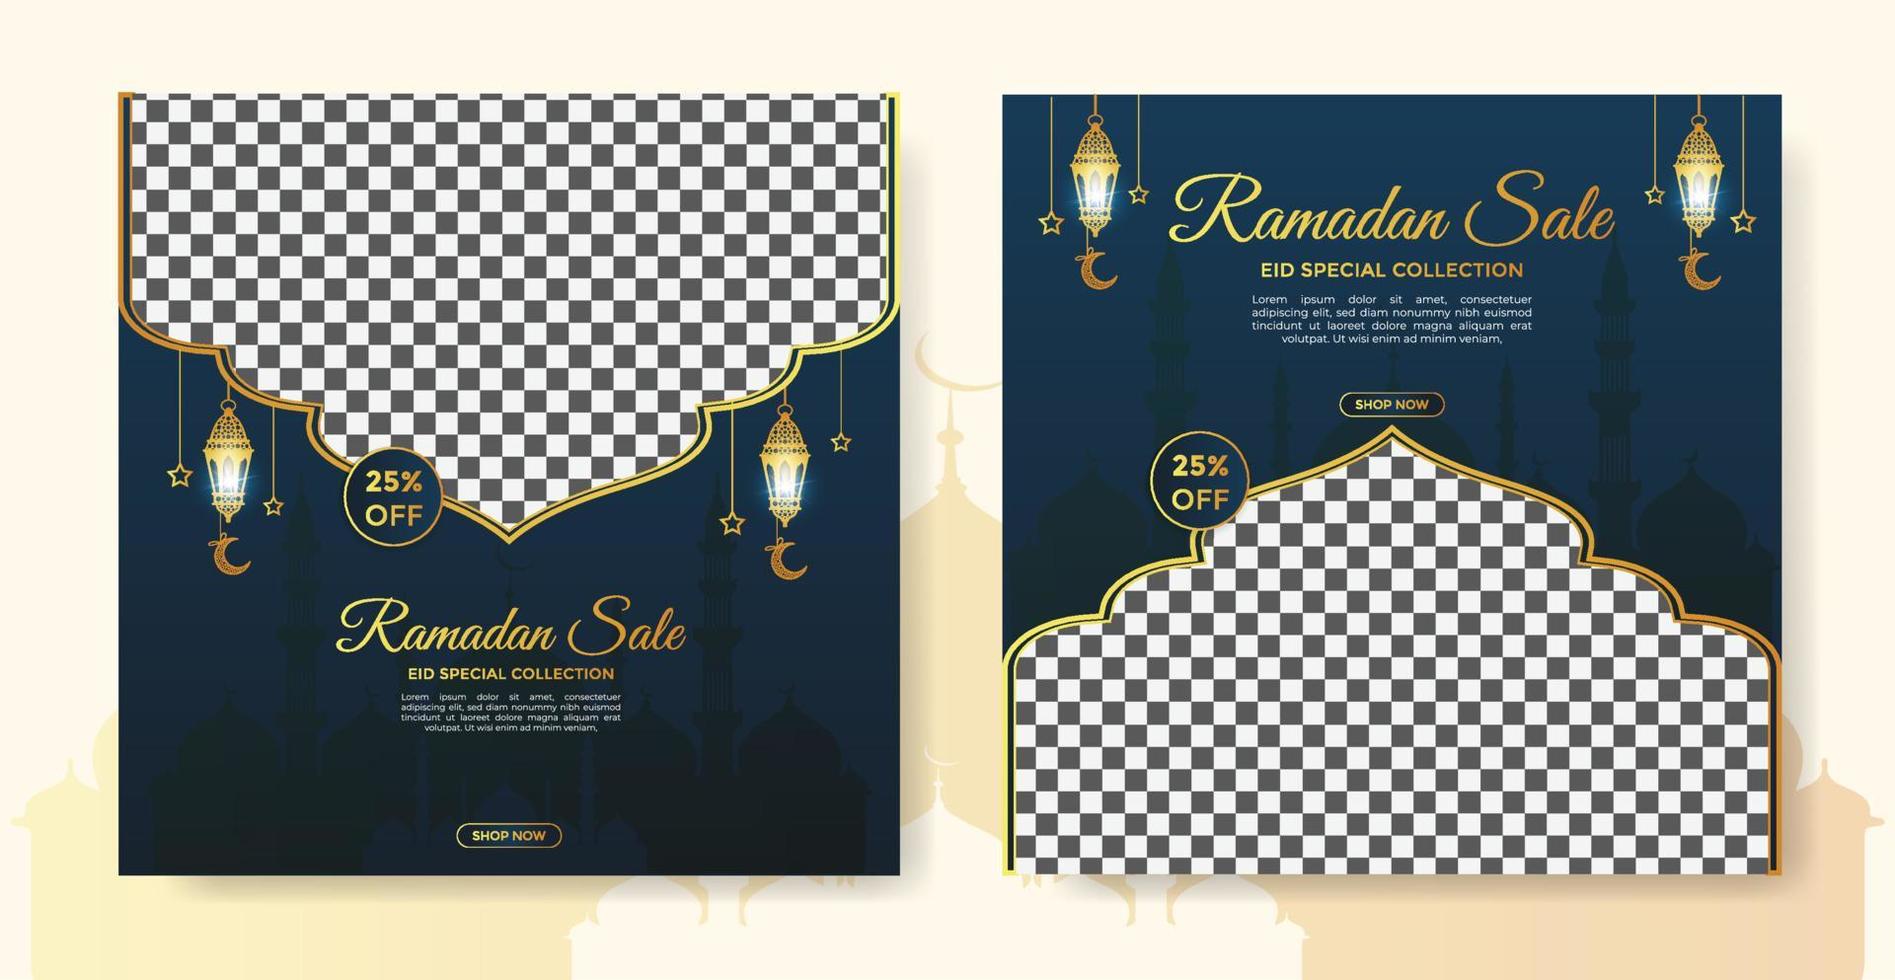 Eid fashion sale banner and Ramadan sale banner, social media post Template, Ramadan Kareem theme Sale square flyer and banner. Big sale bundle Eid ads post, Greeting card Islamic background design vector